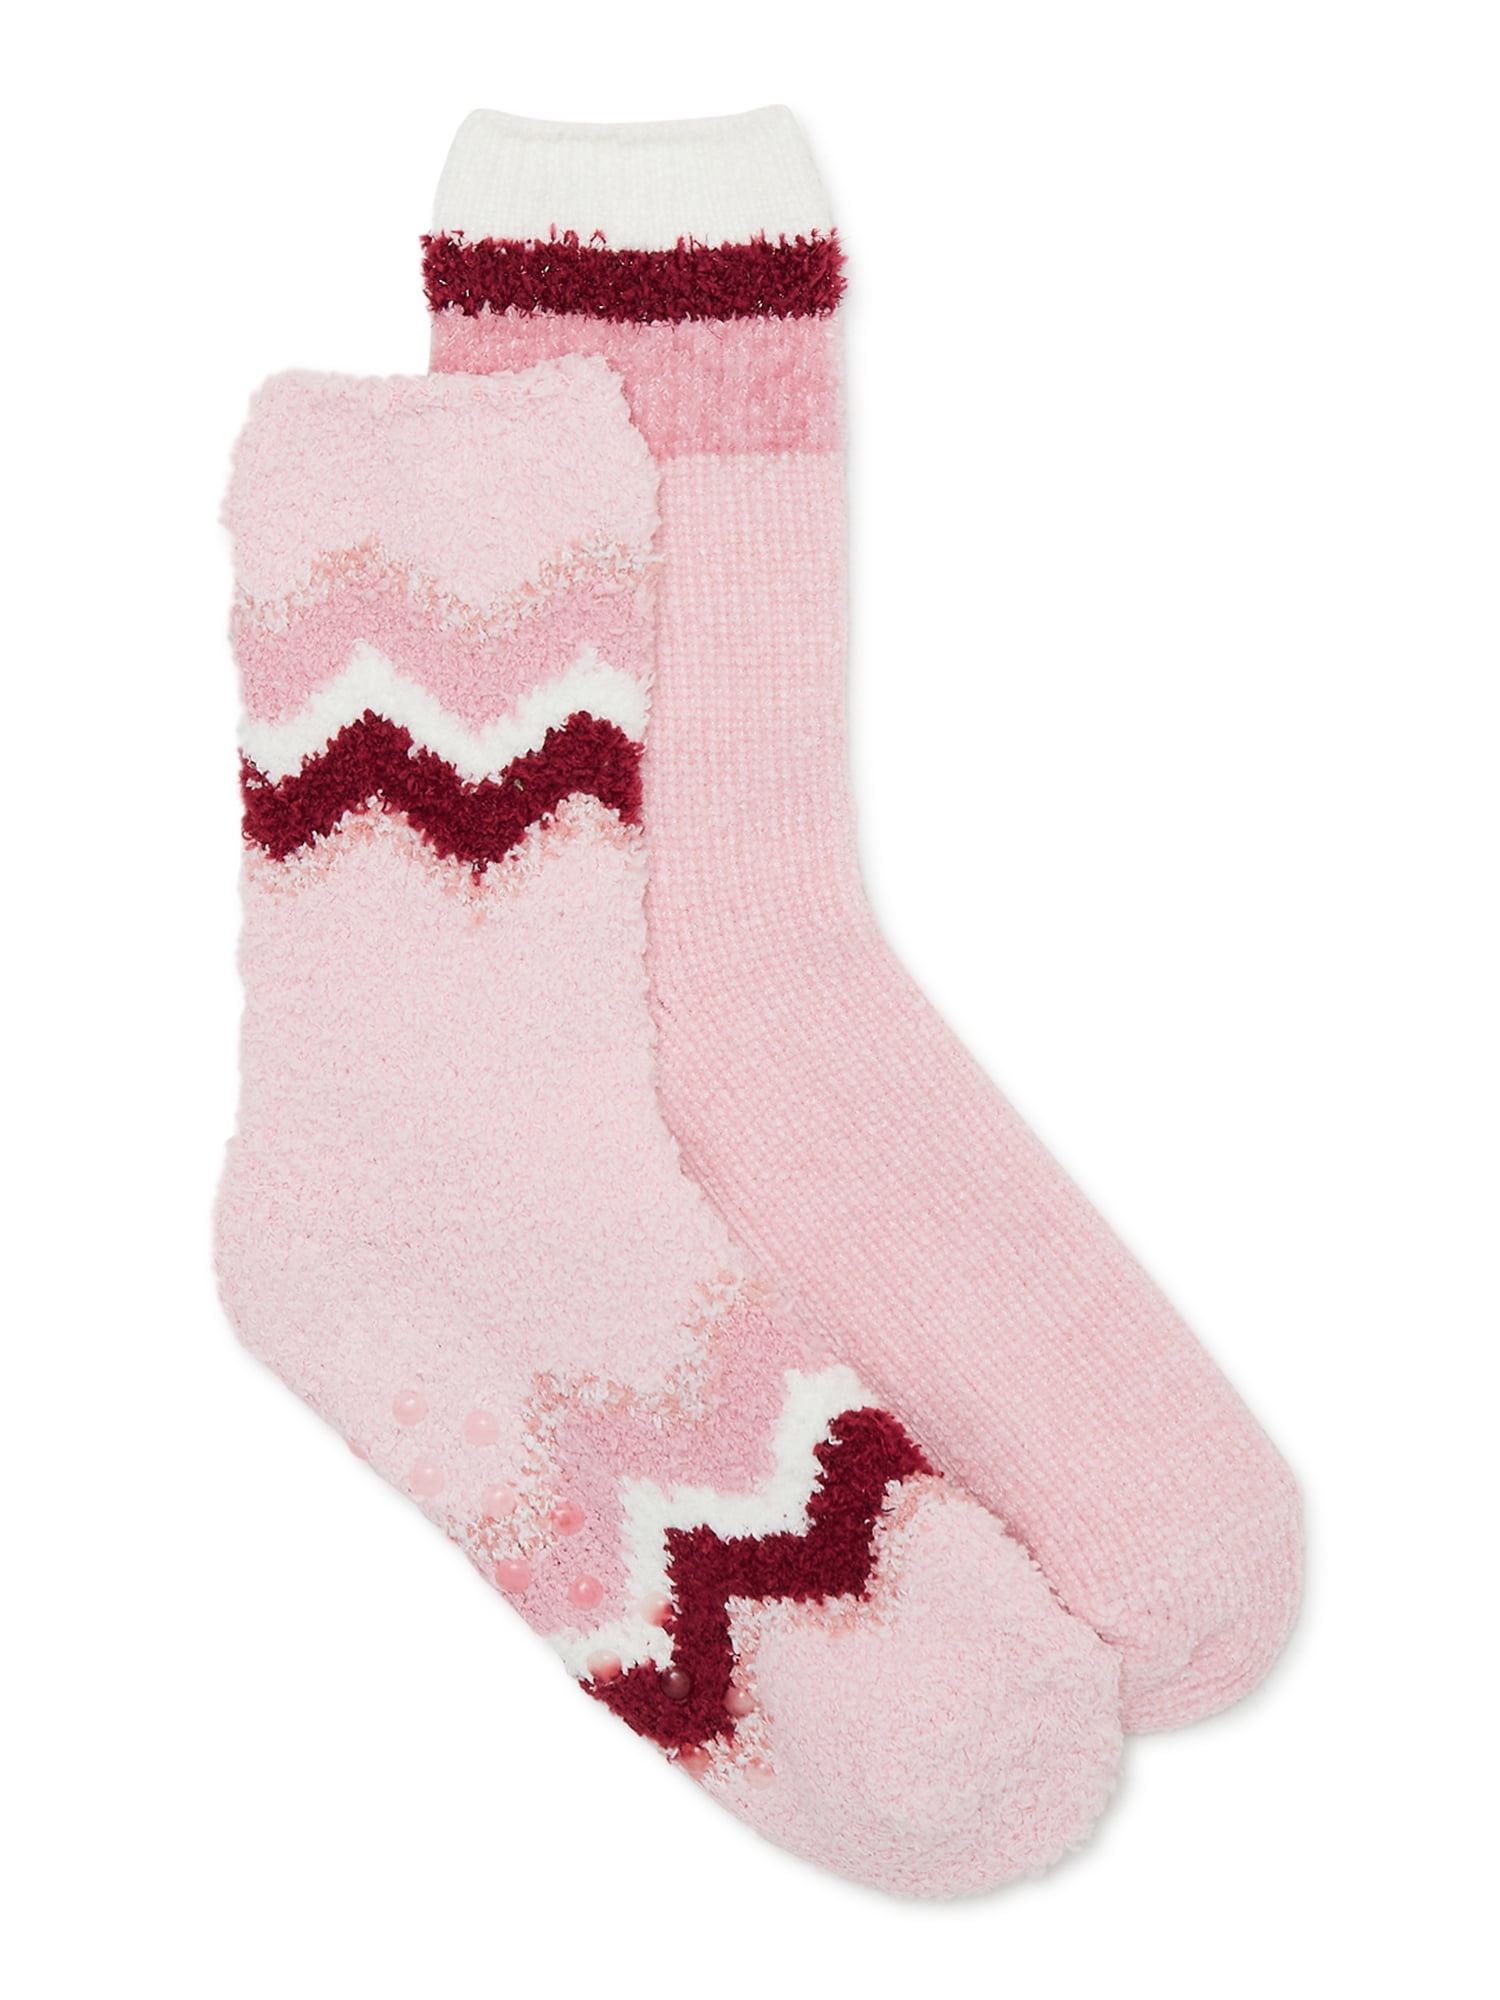 Joyspun Women's Lounge Socks, 2-Pack, Size 4-10 - Walmart.com